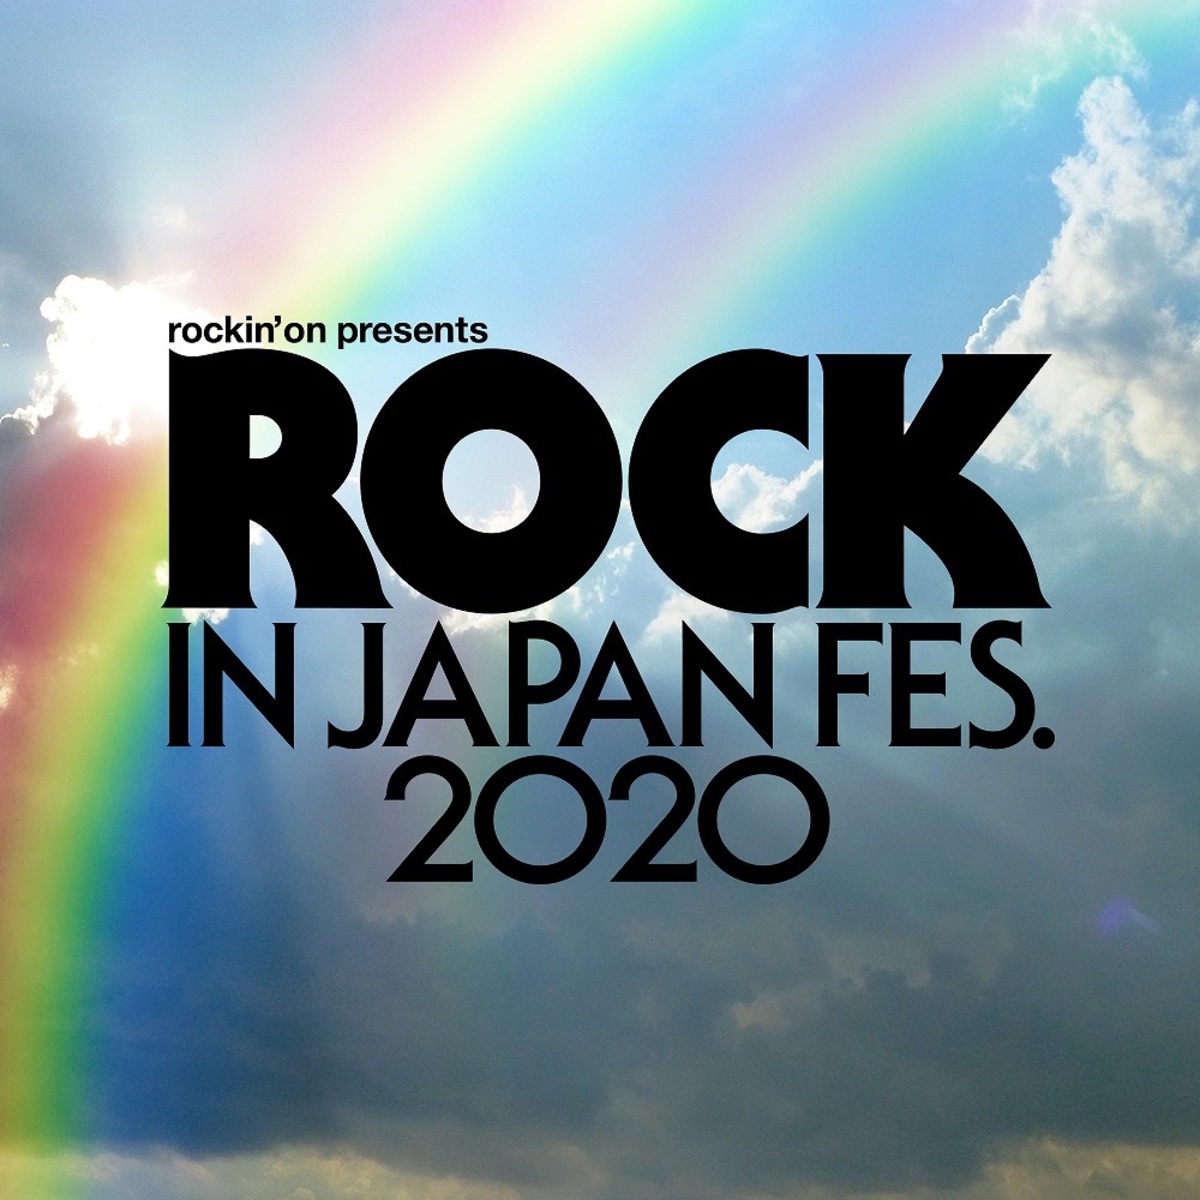 ROCK IN JAPAN FESTIVAL 2020、出演予定だったアーティストを発表 | 激ロック ニュース